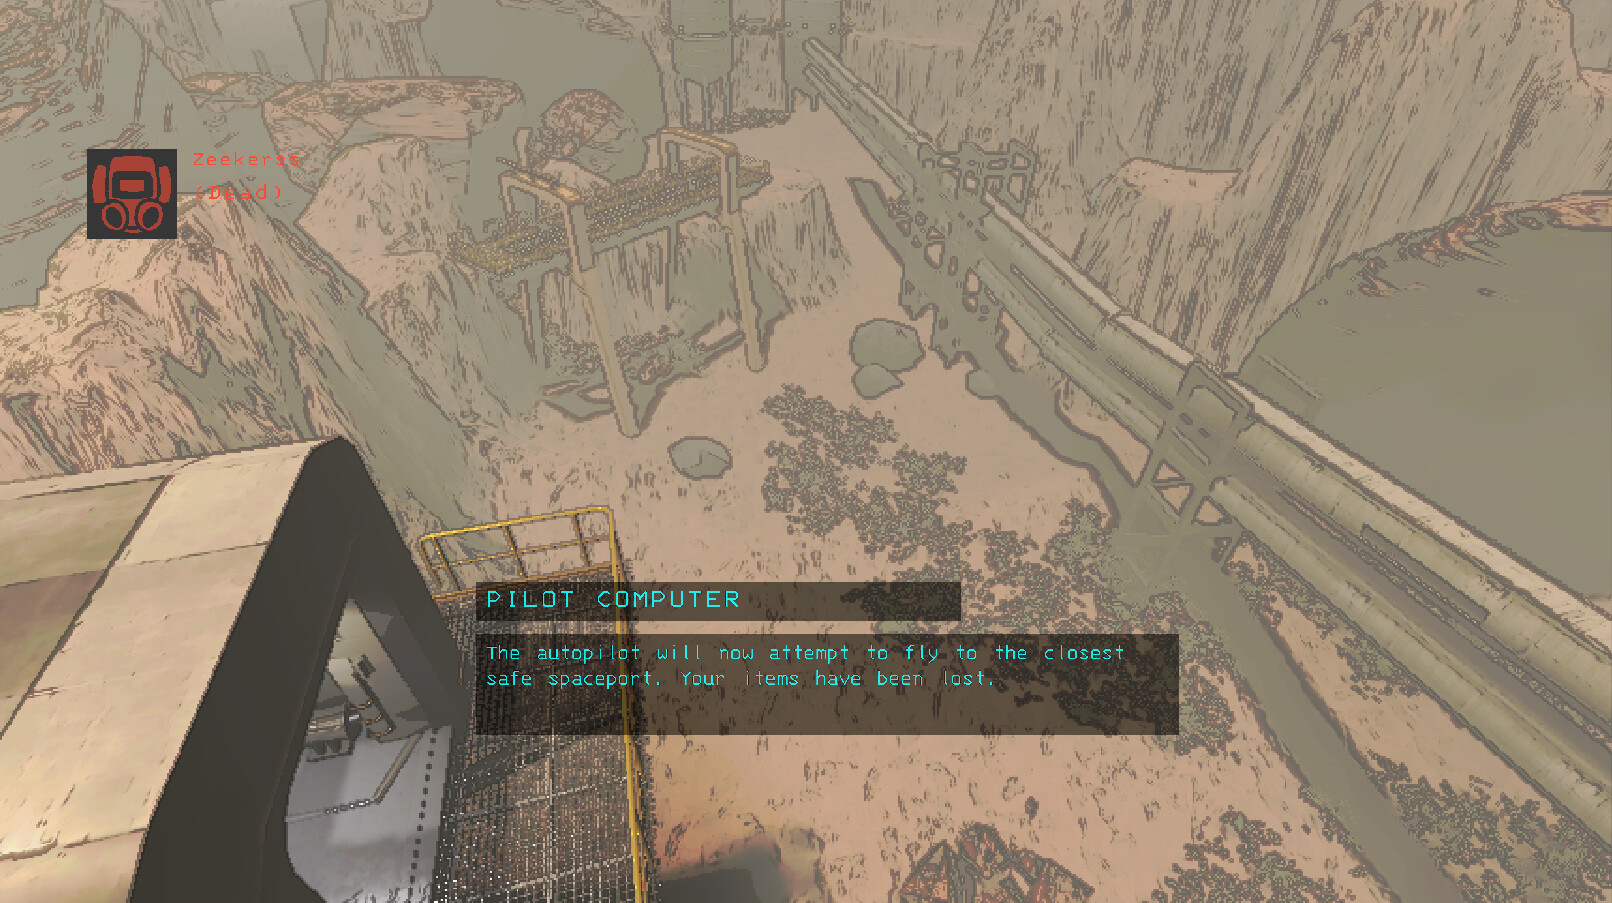 Lethal Company: O Jogo Indie Cooperativo que está Bombando na Steam! -  Portal do Pixel